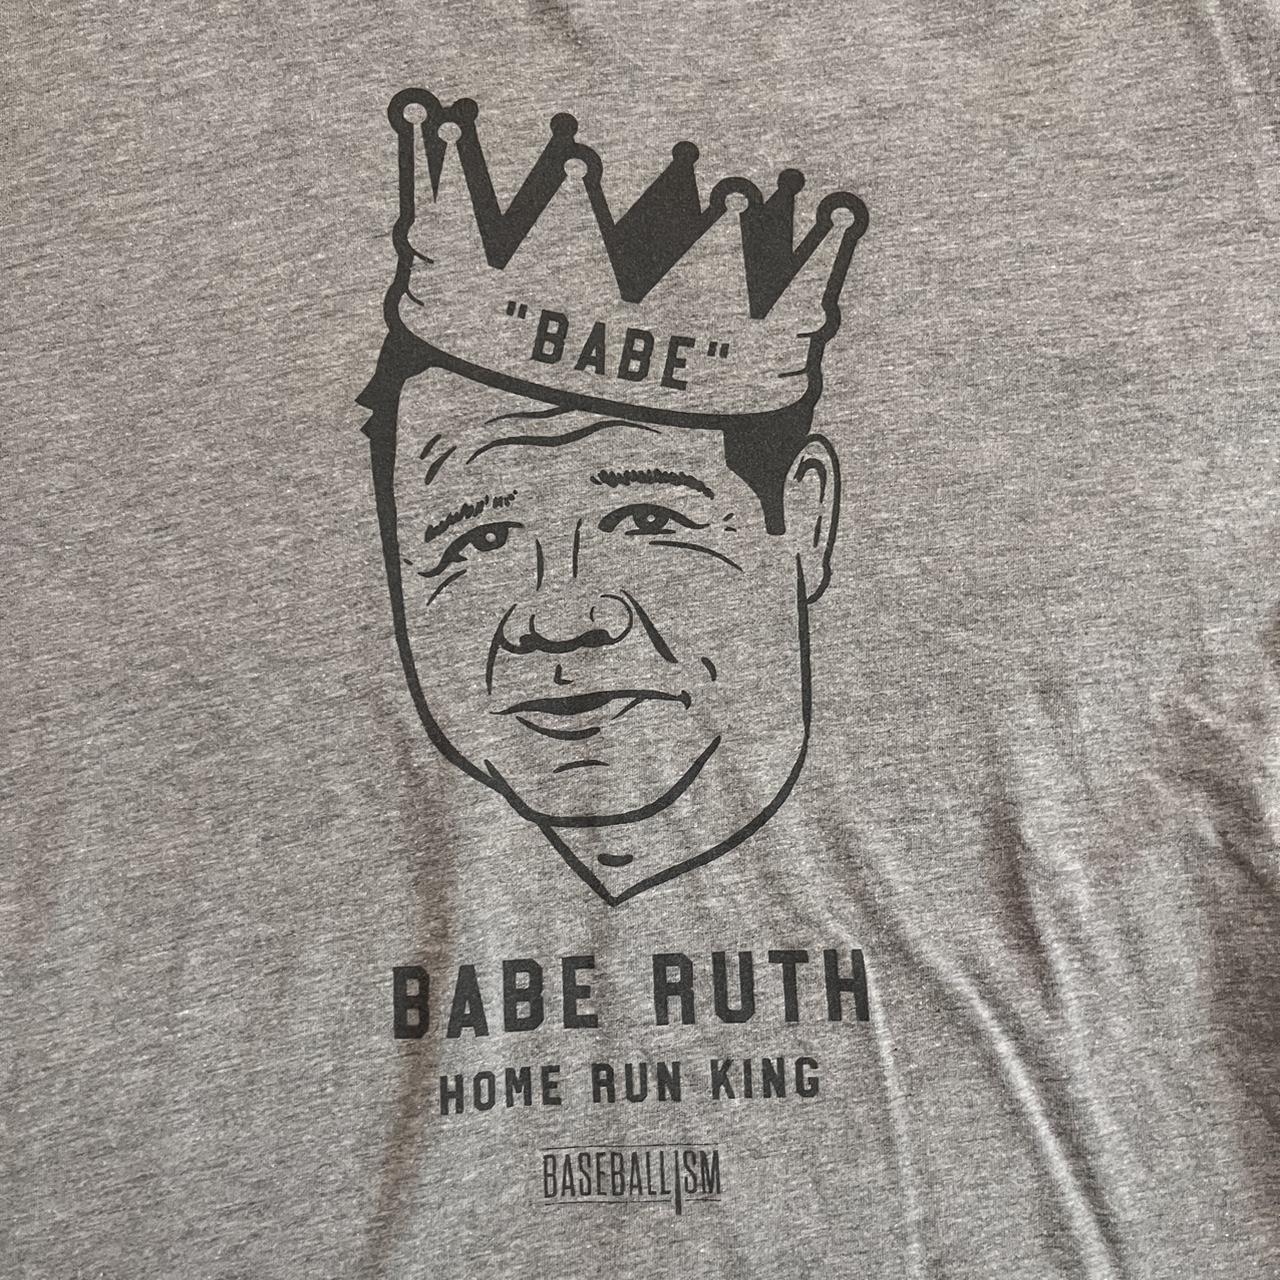 Babe Ruth jersey. Never worn like brand new - Depop